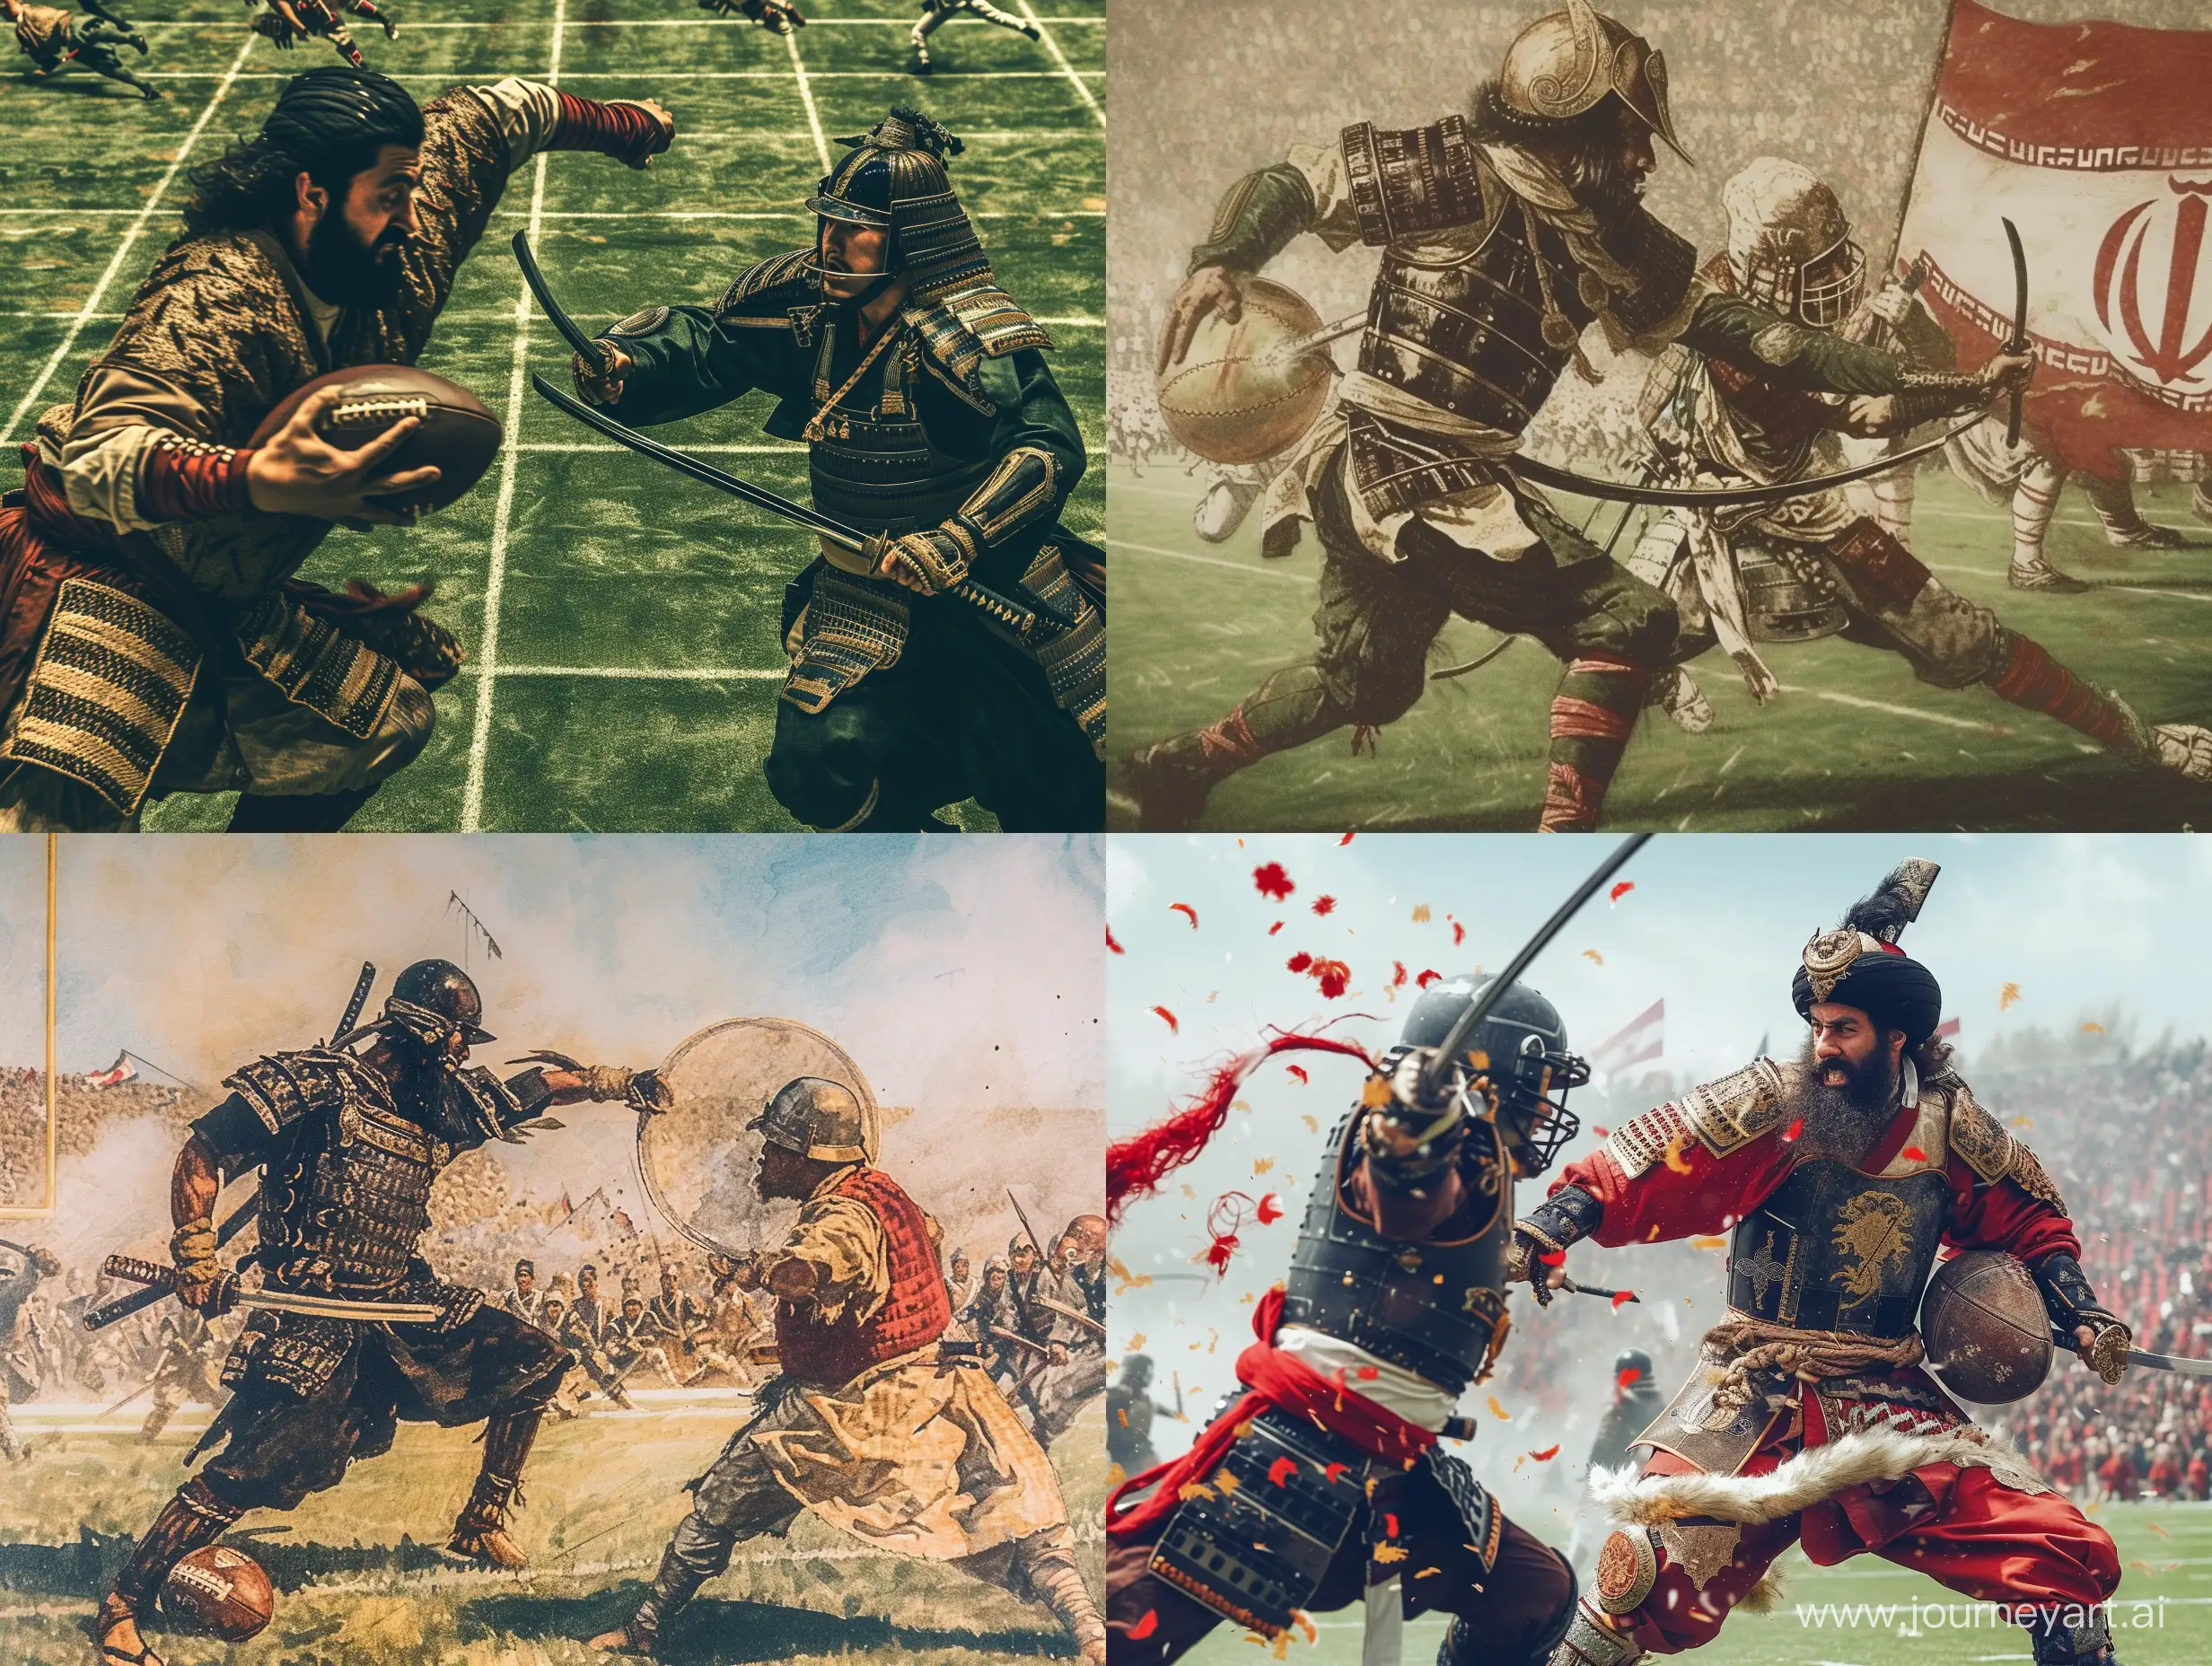 Intense-Clash-Iranian-Chitai-Warrior-vs-Japanese-Samurai-on-the-Football-Field